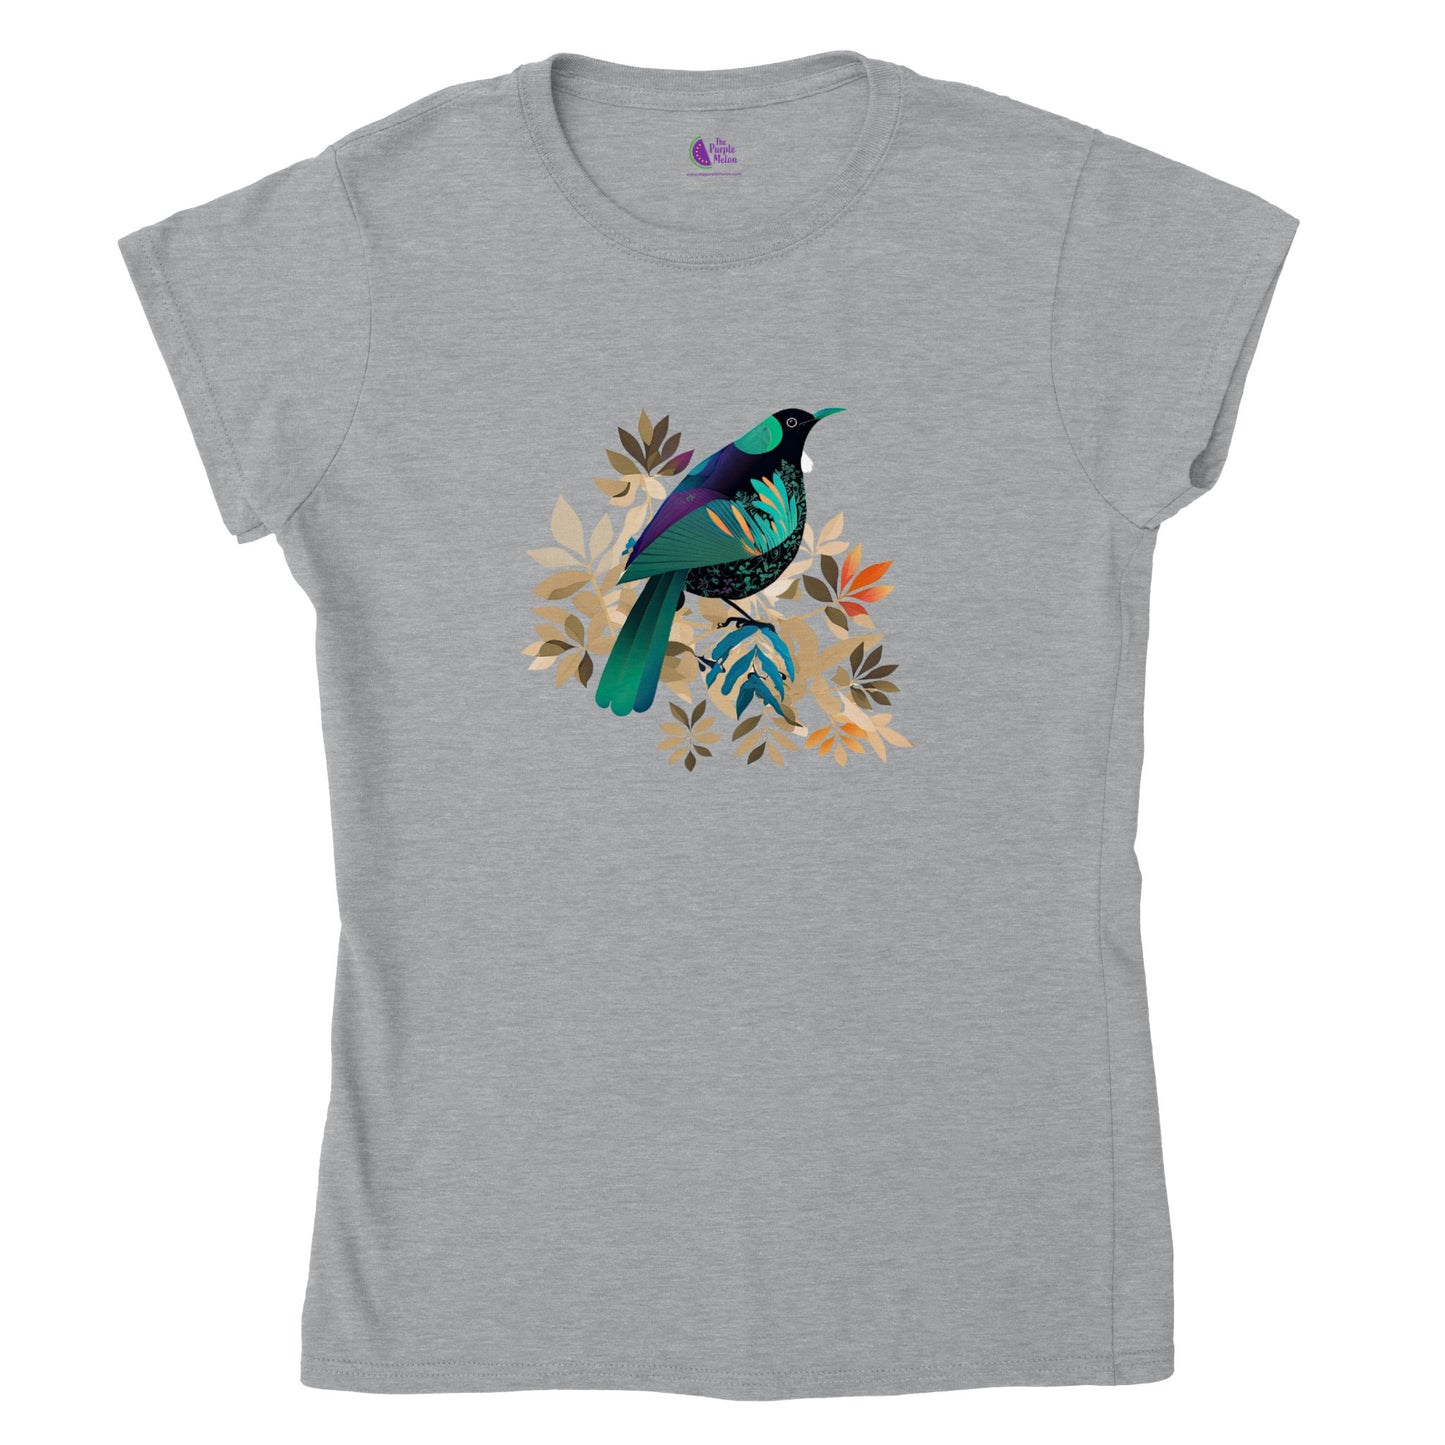 Grey t-shirt with a contemporary new zealand tui bird print